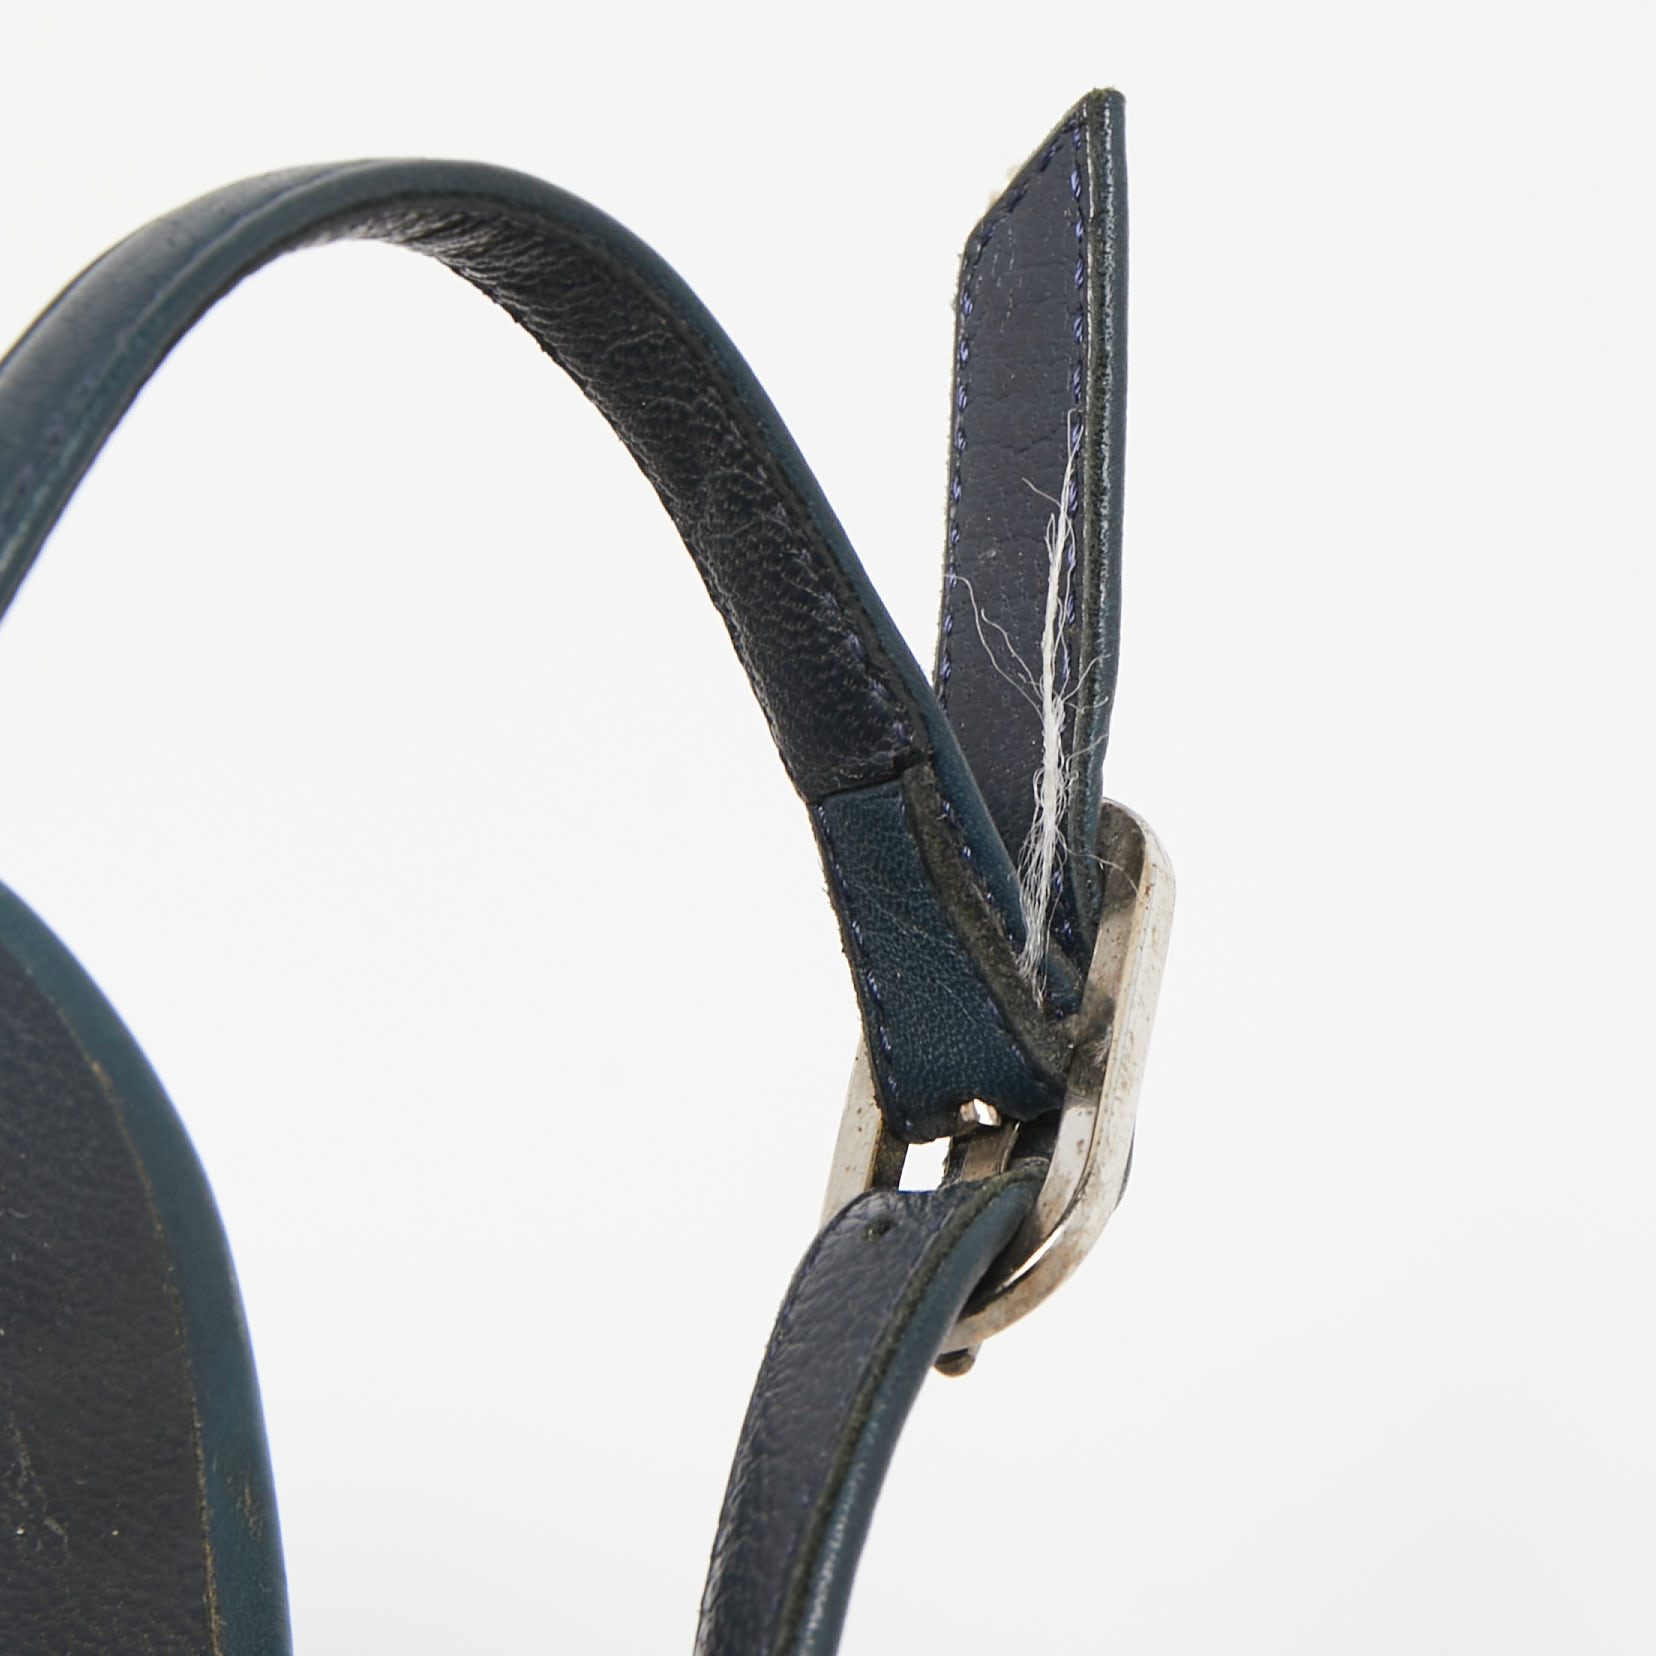 Chanel Navy Blue Leather CC Chain Detail Peep Toe Platform Slingback Sandals Size 38